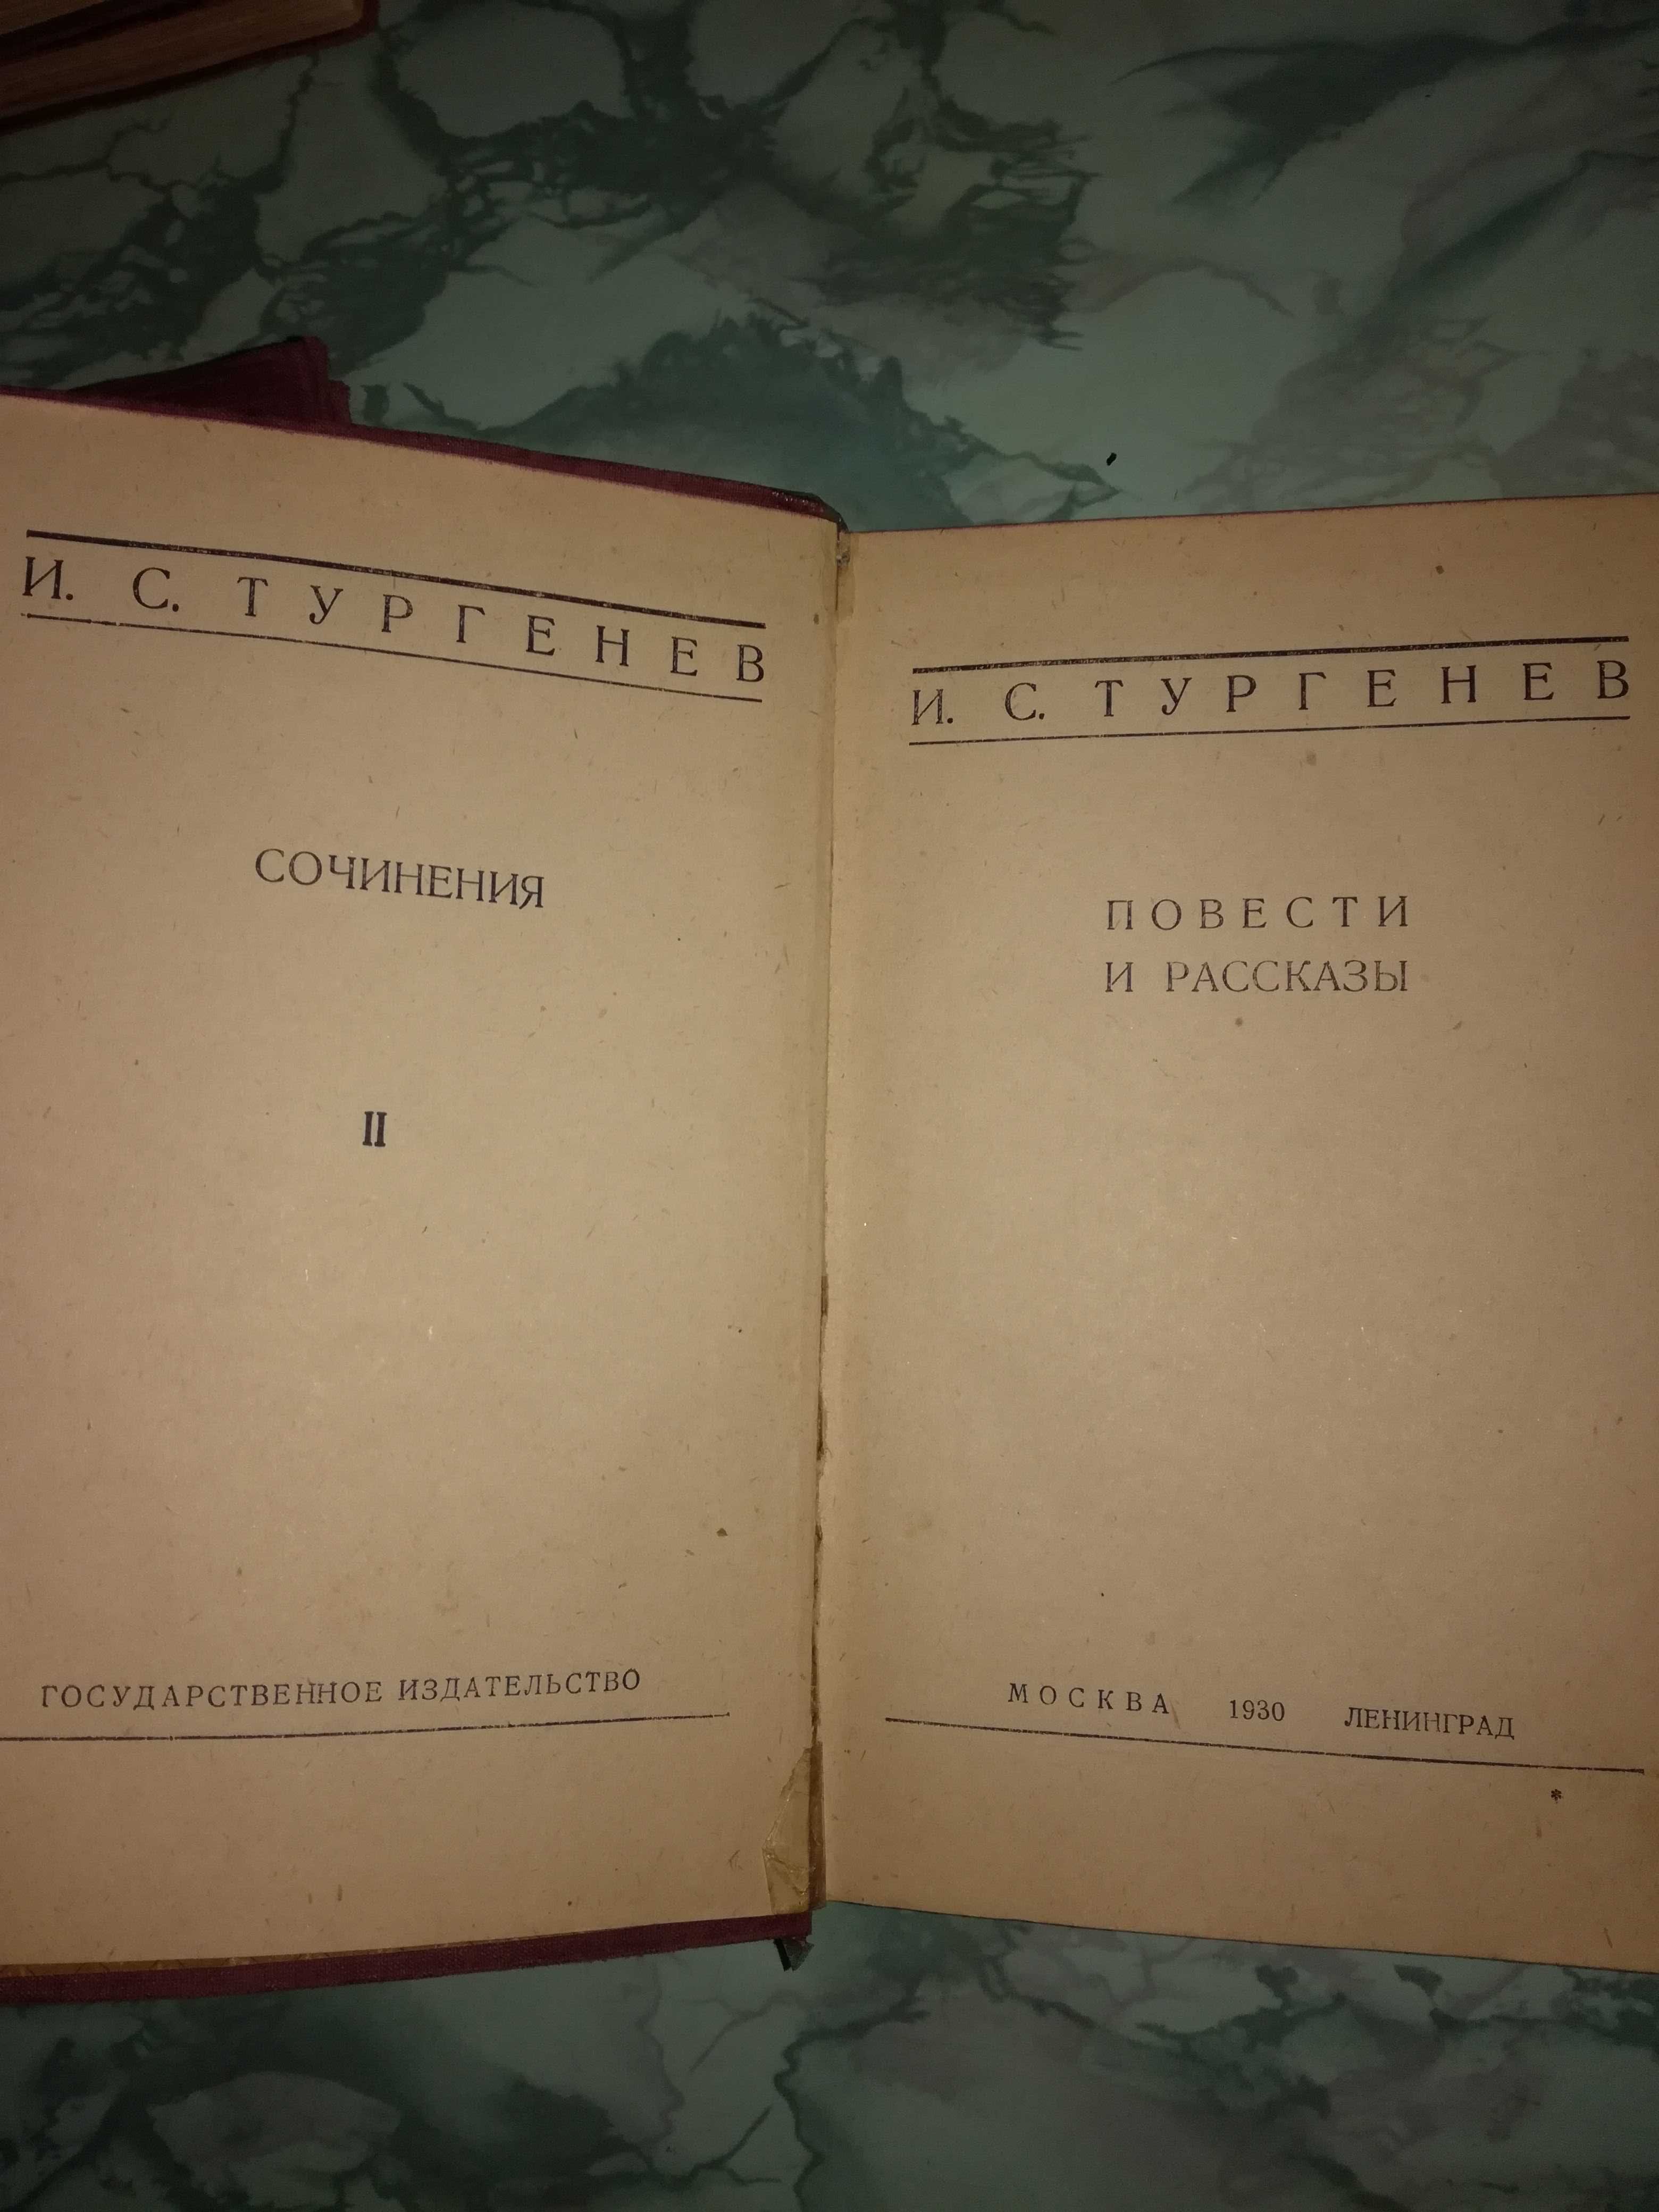 Книги И.С .Тургенева.1930г.